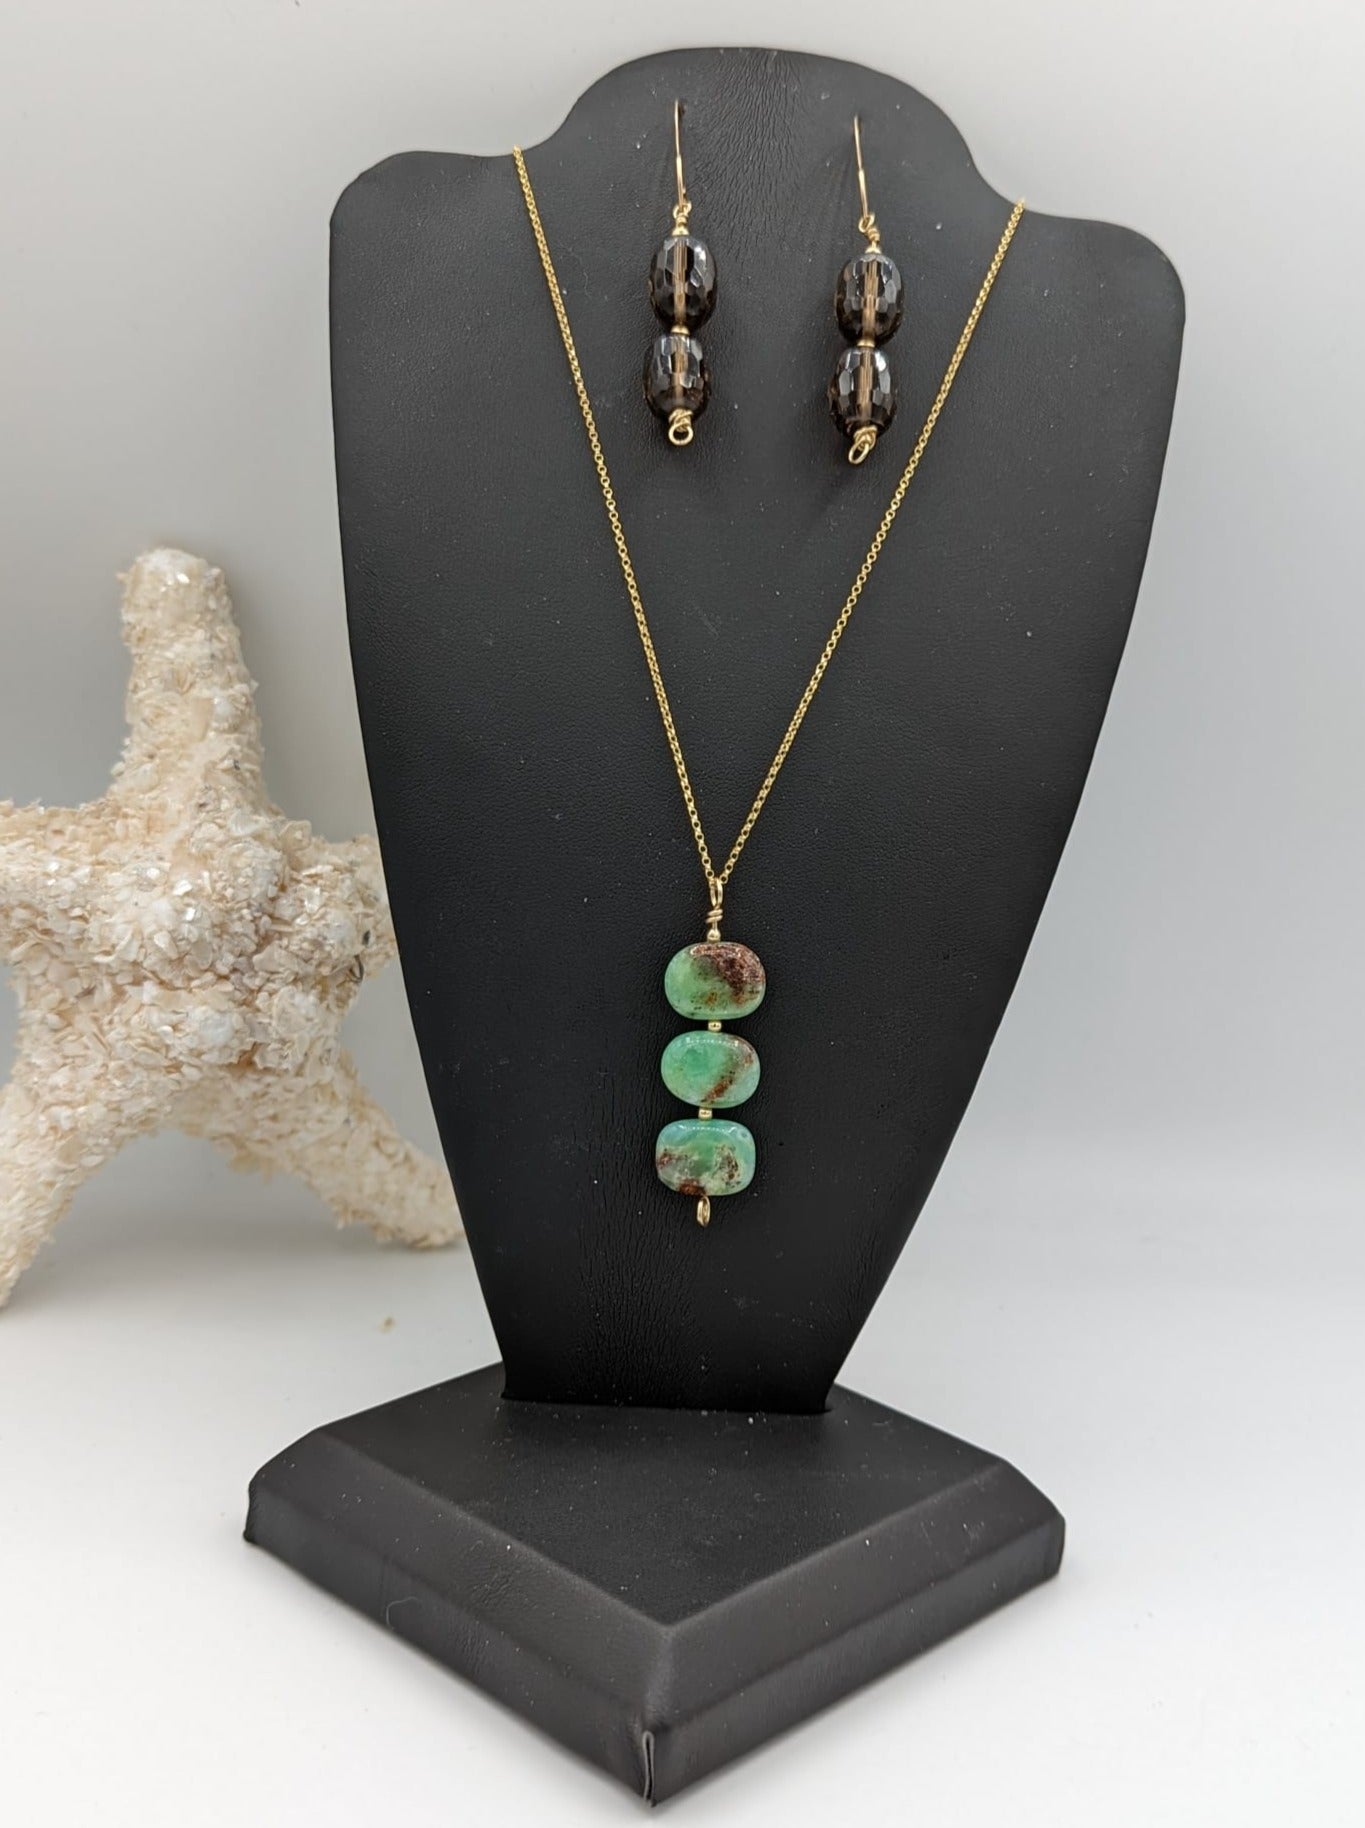 Chyrosaprase Pendant styled with gold-filled smokey quartz earrings